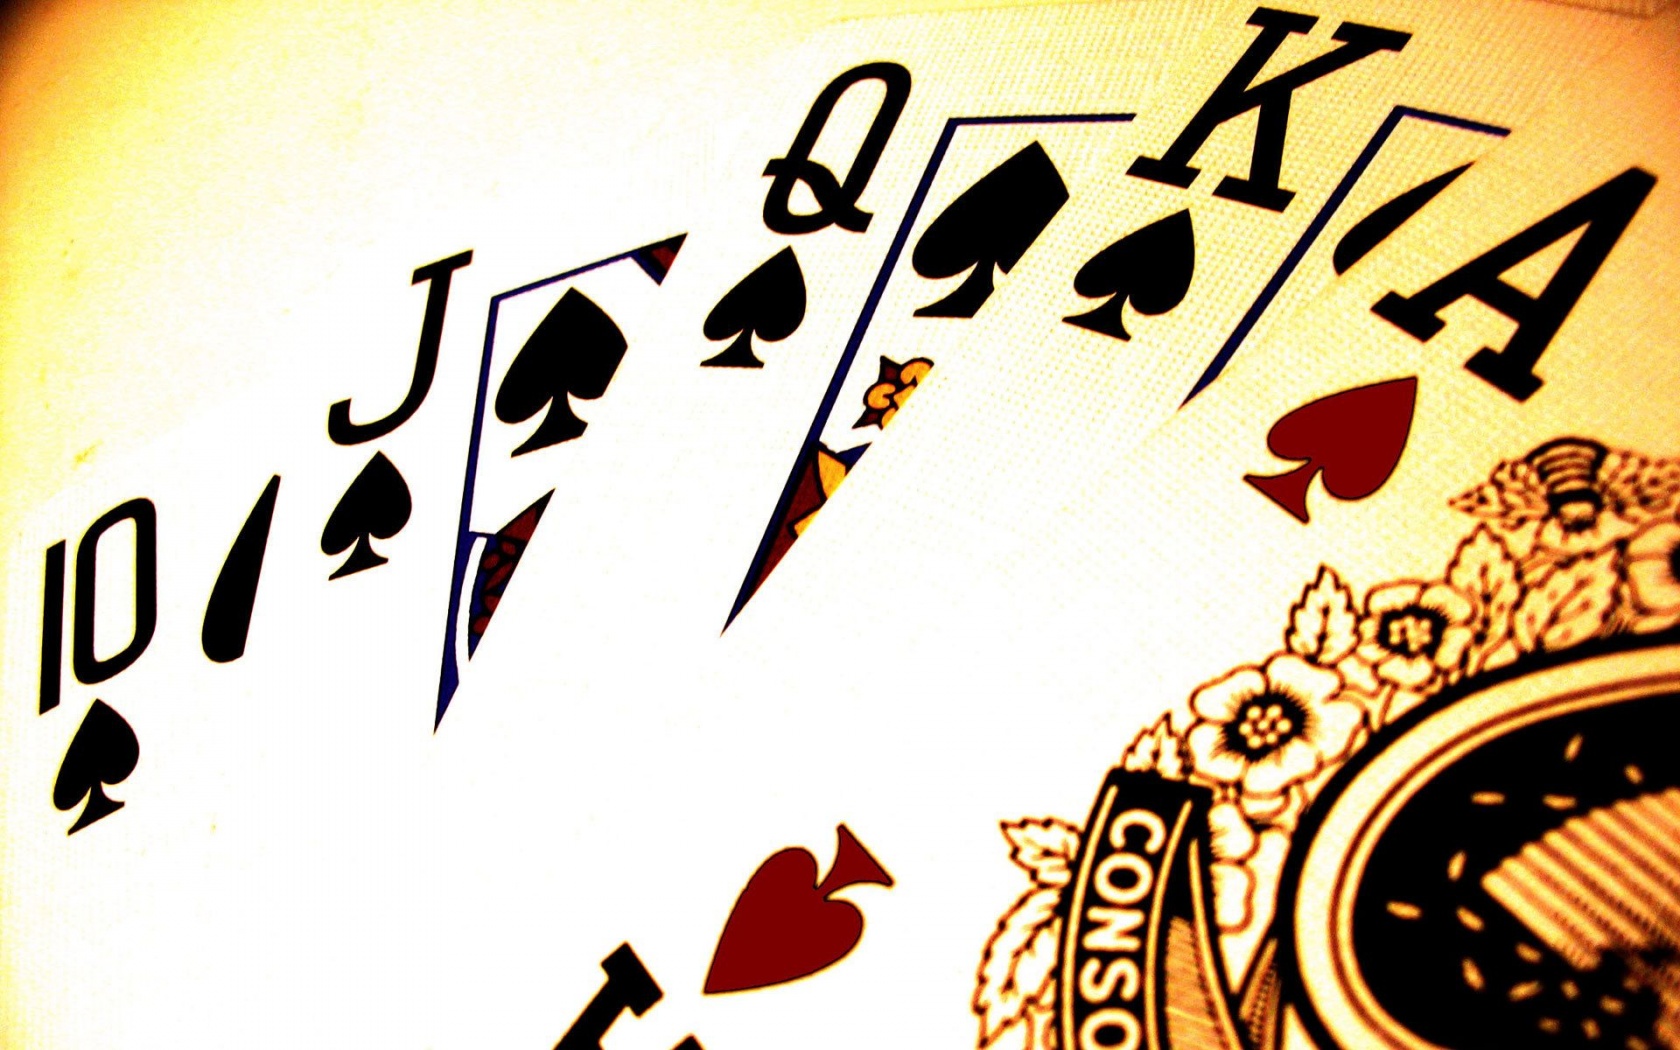 Cards Poker Royal Flush